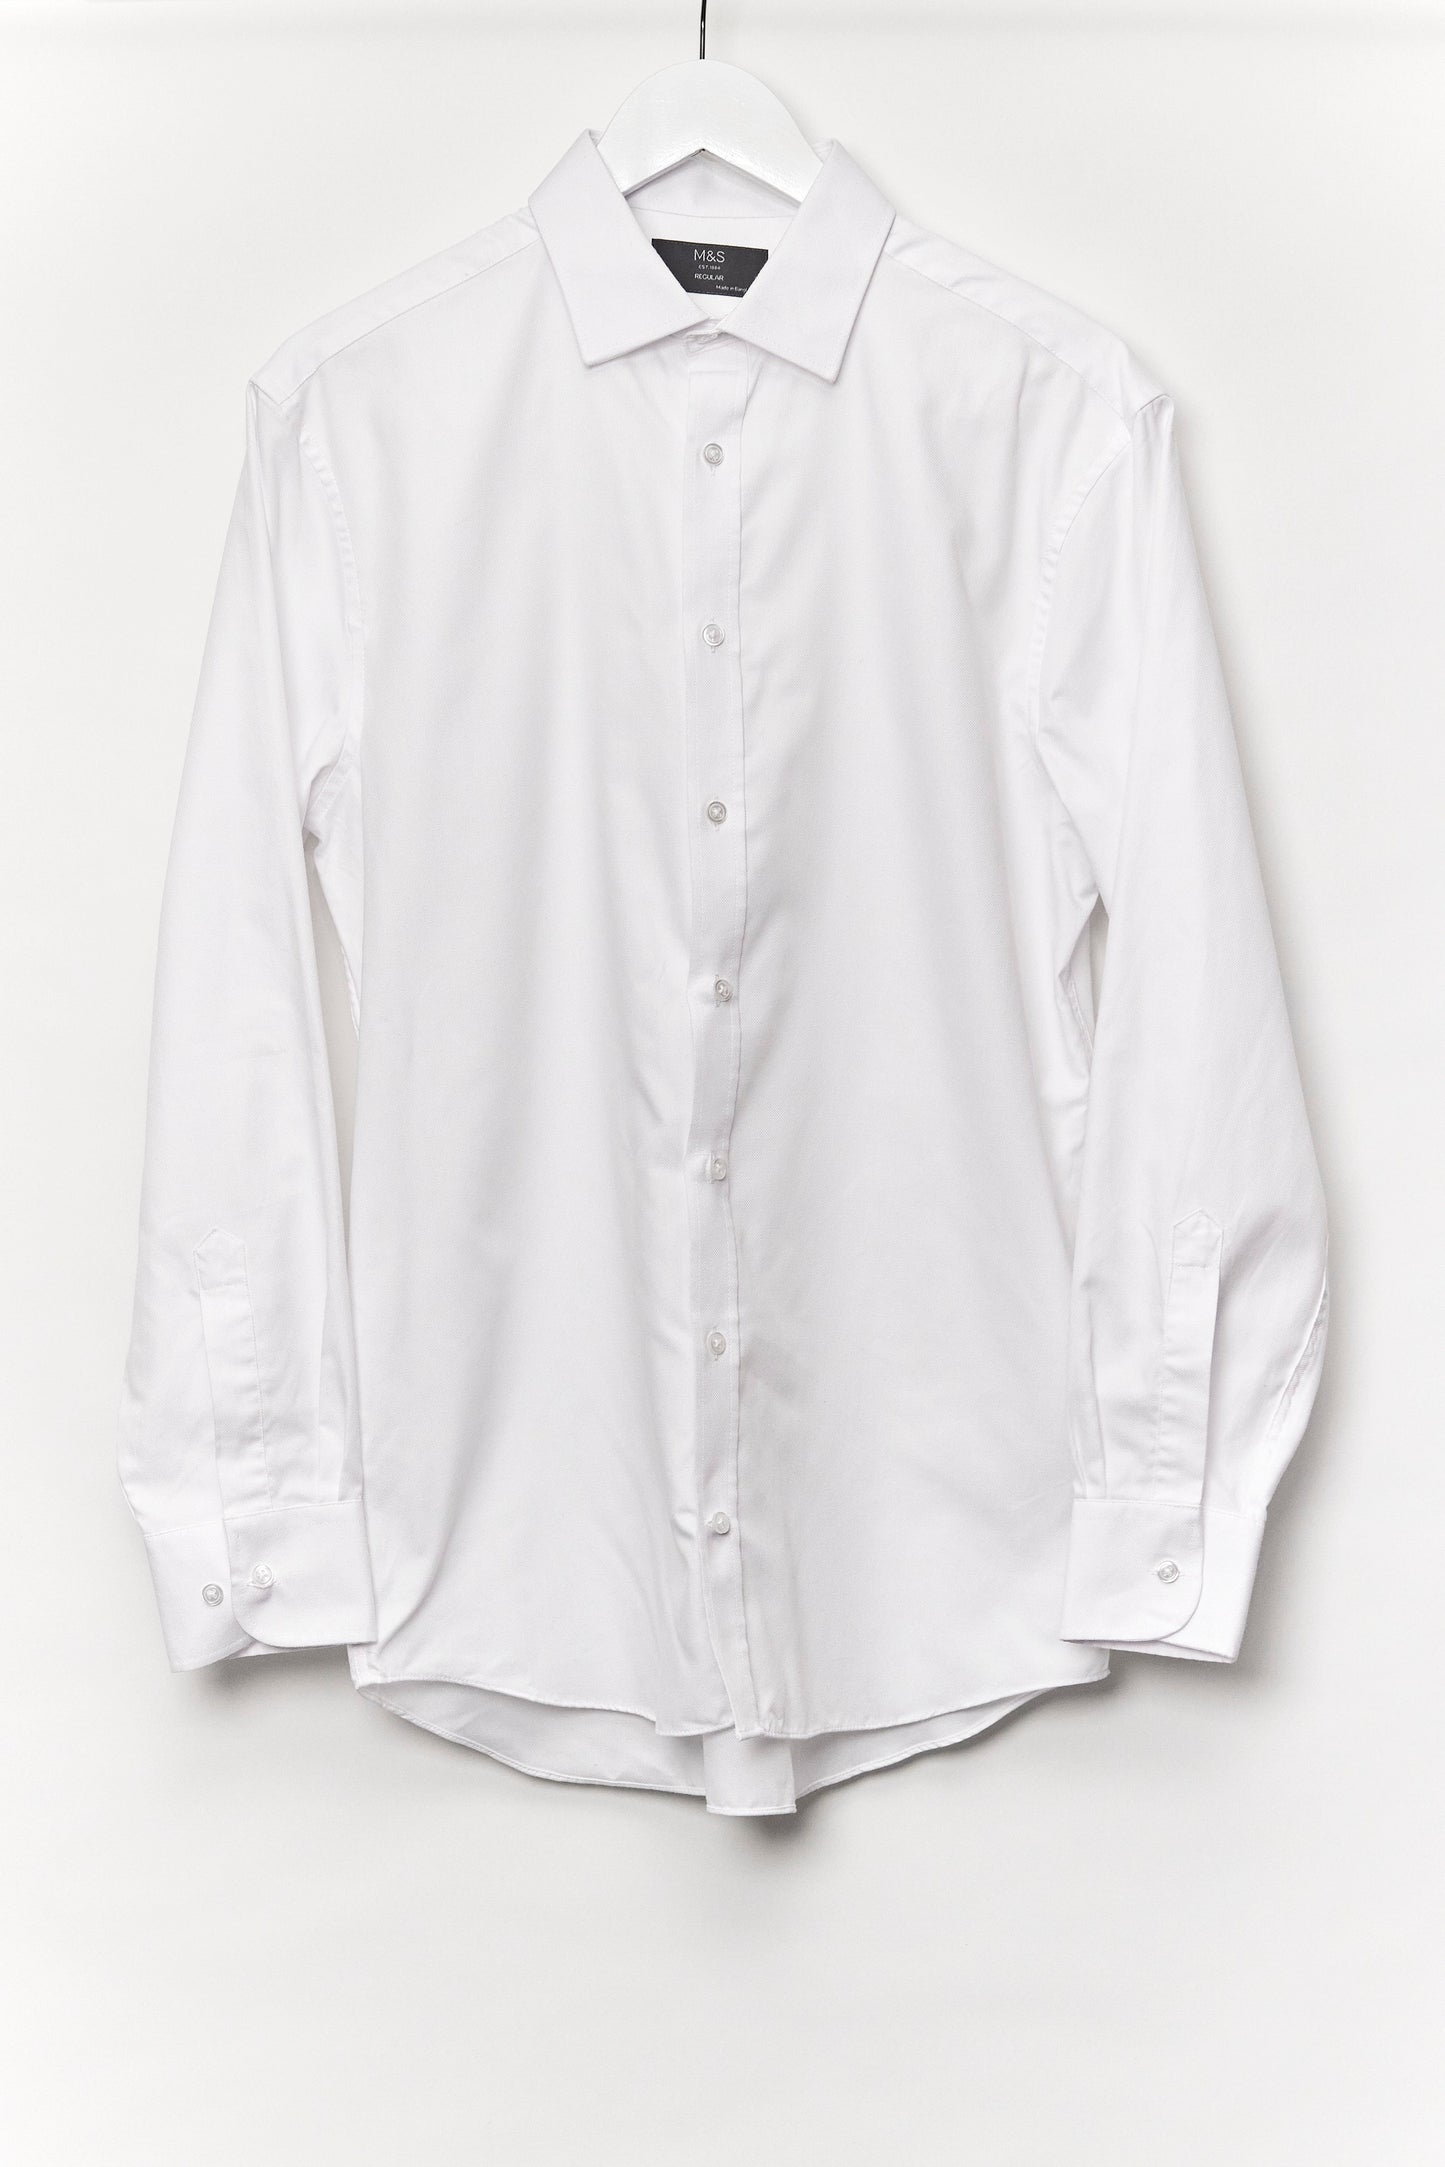 Mens M&S White Regular fit Shirt Size Medium